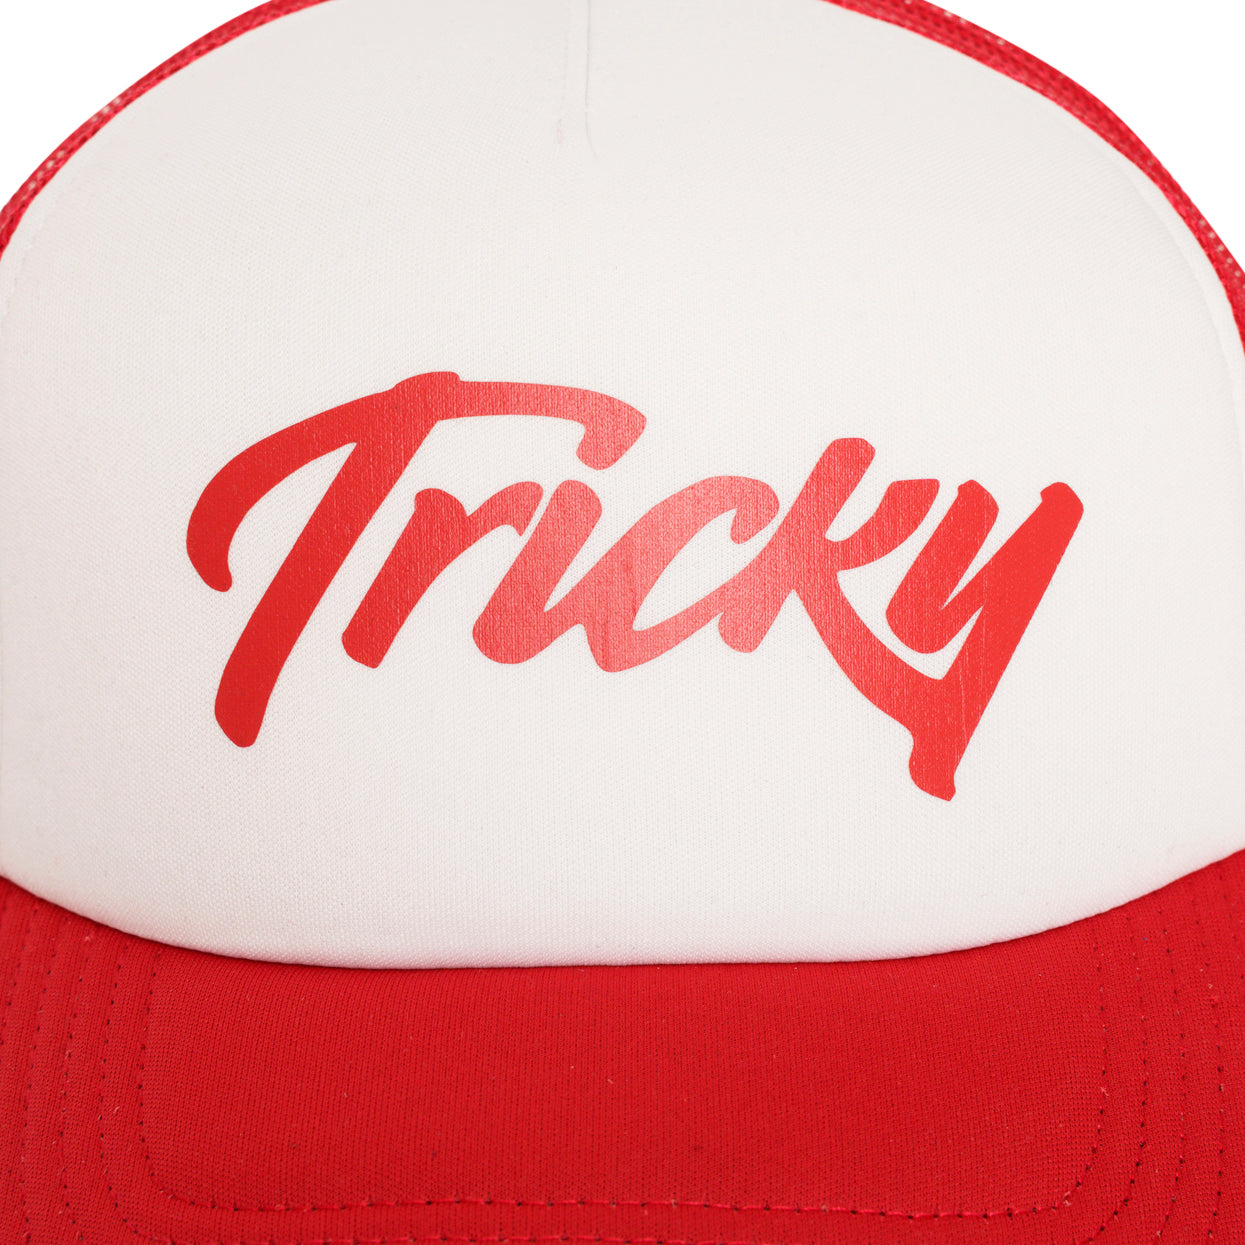 TRICKY LARGE LOGO 5 PANEL FOAM TRUCKER CAP WHITE RED